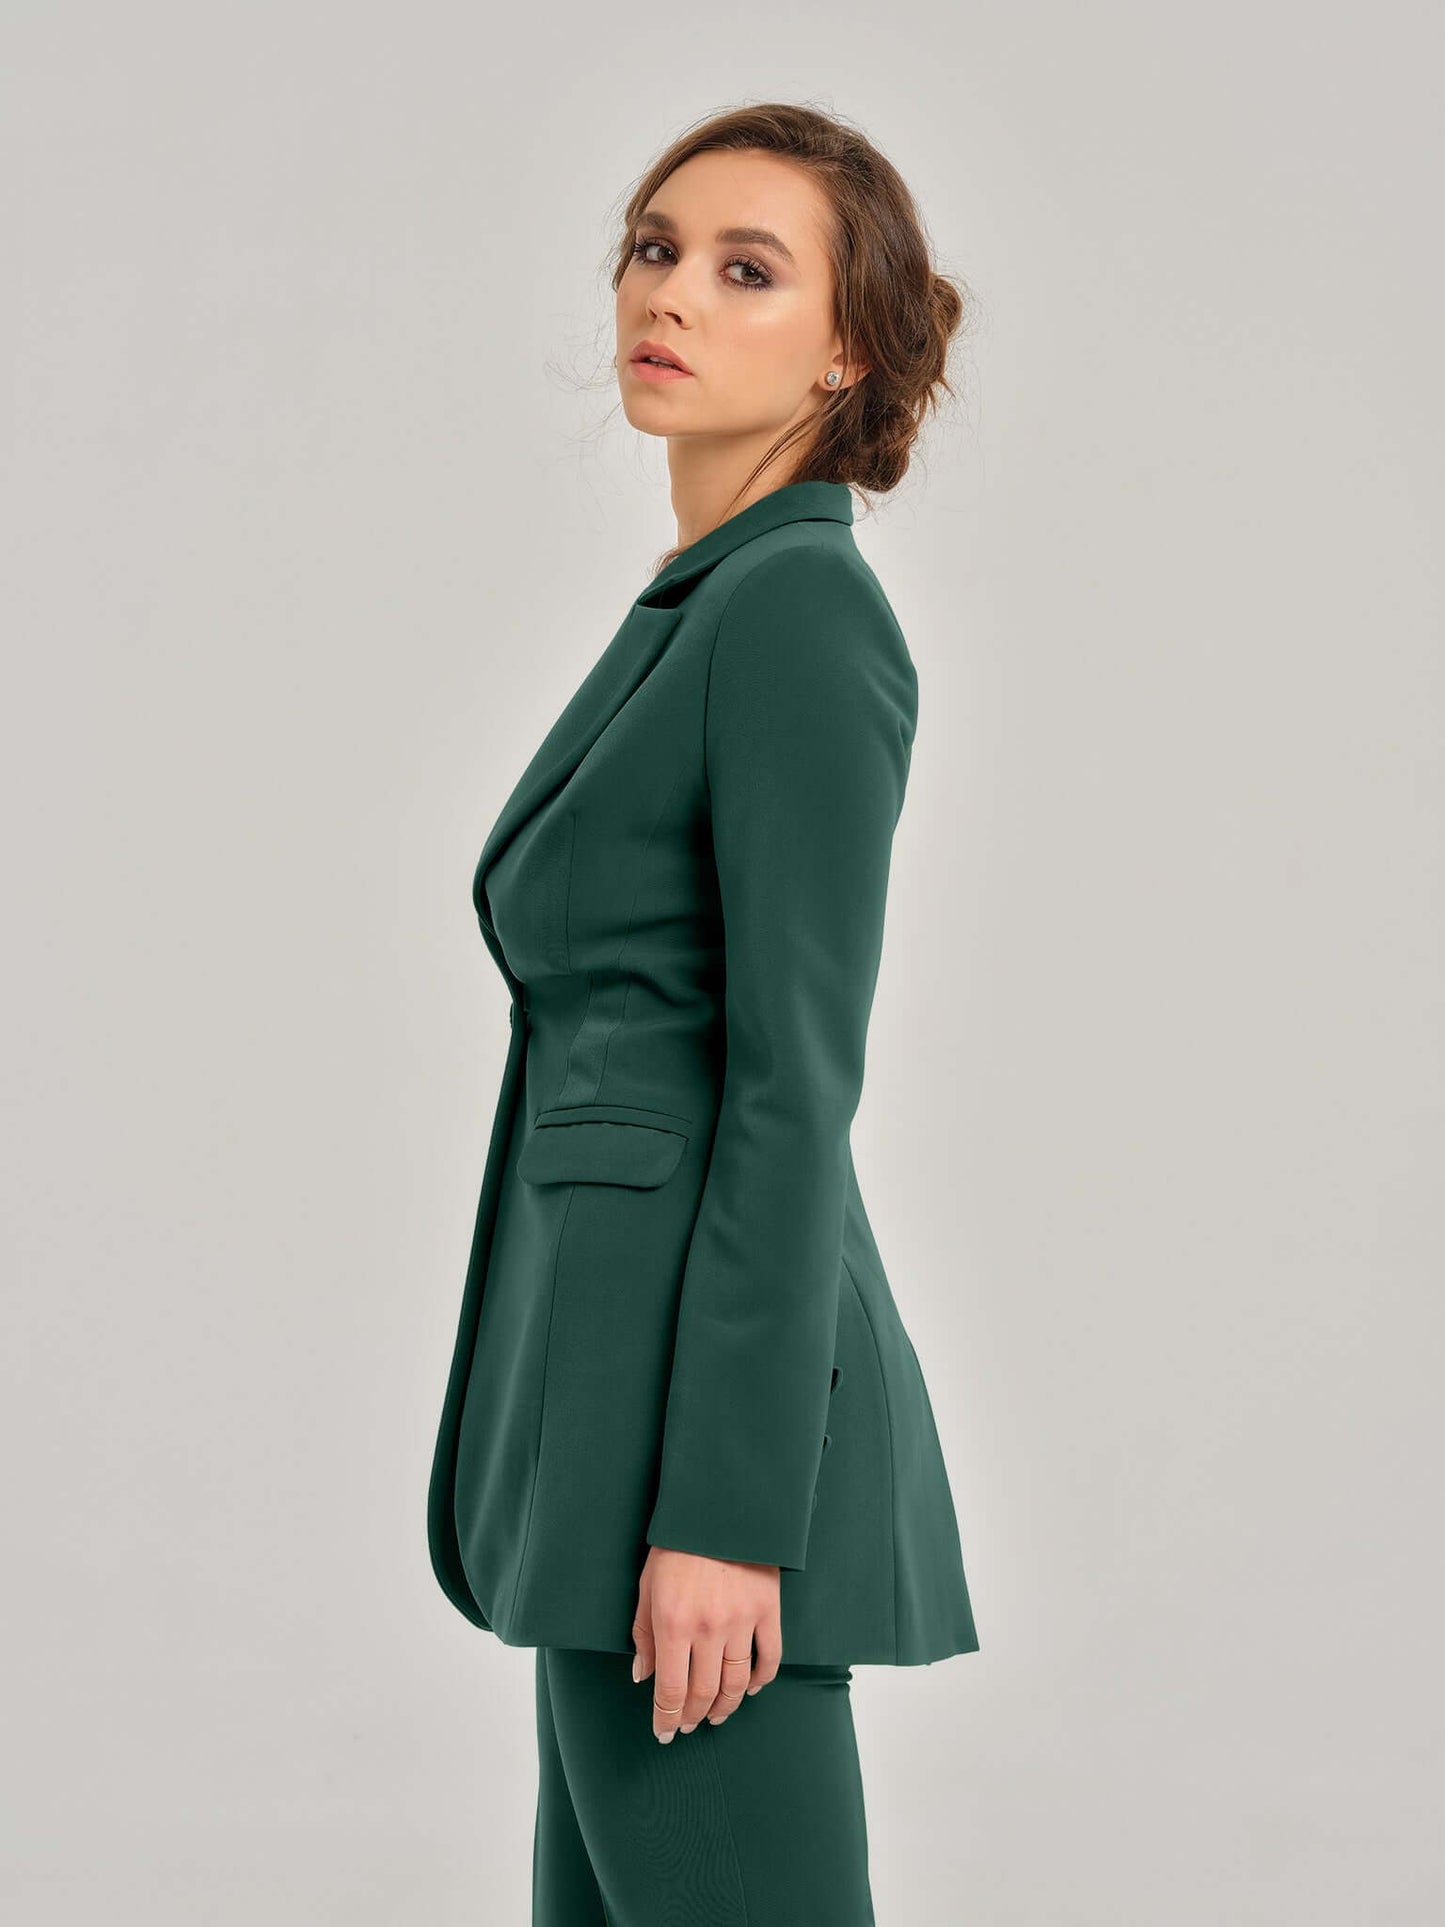 Emerald Dream Timeless Classic Blazer by Tia Dorraine Women's Luxury Fashion Designer Clothing Brand